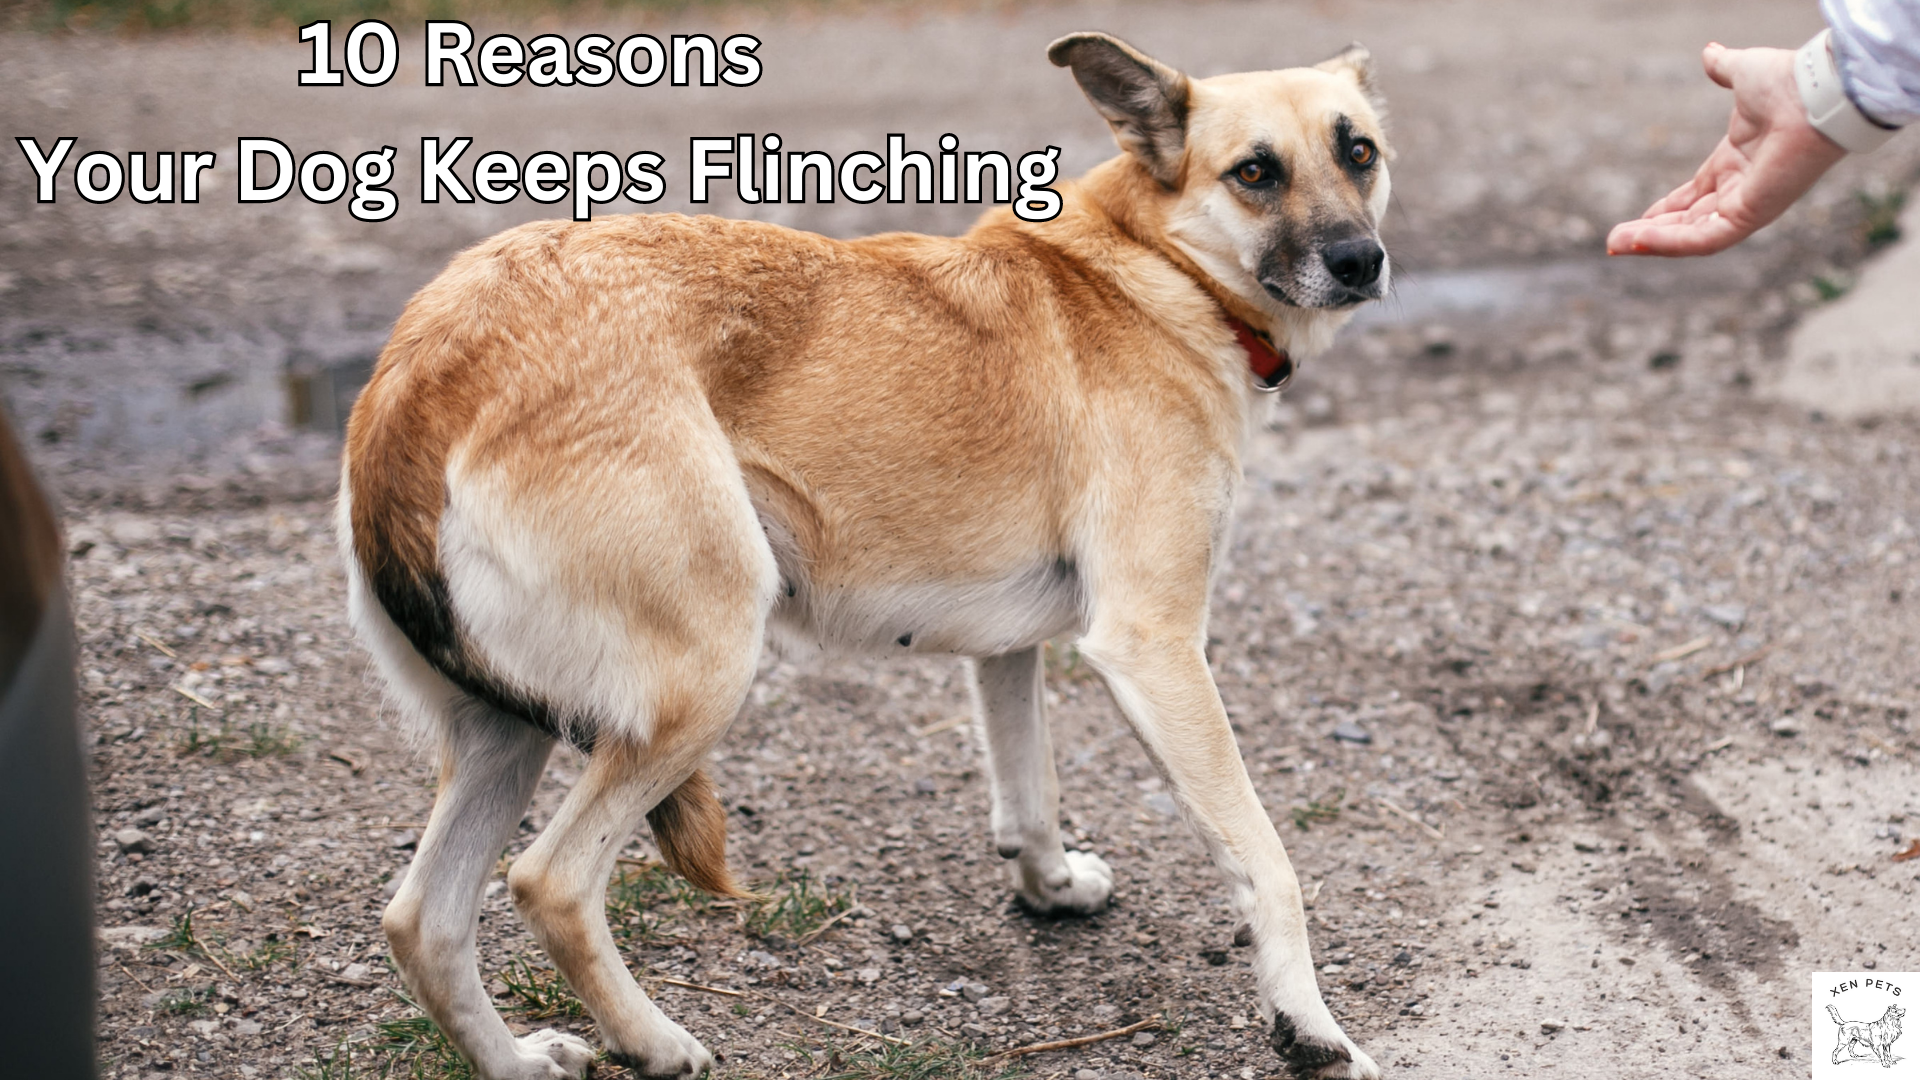 10 Reasons Your Dog Keeps Flinching